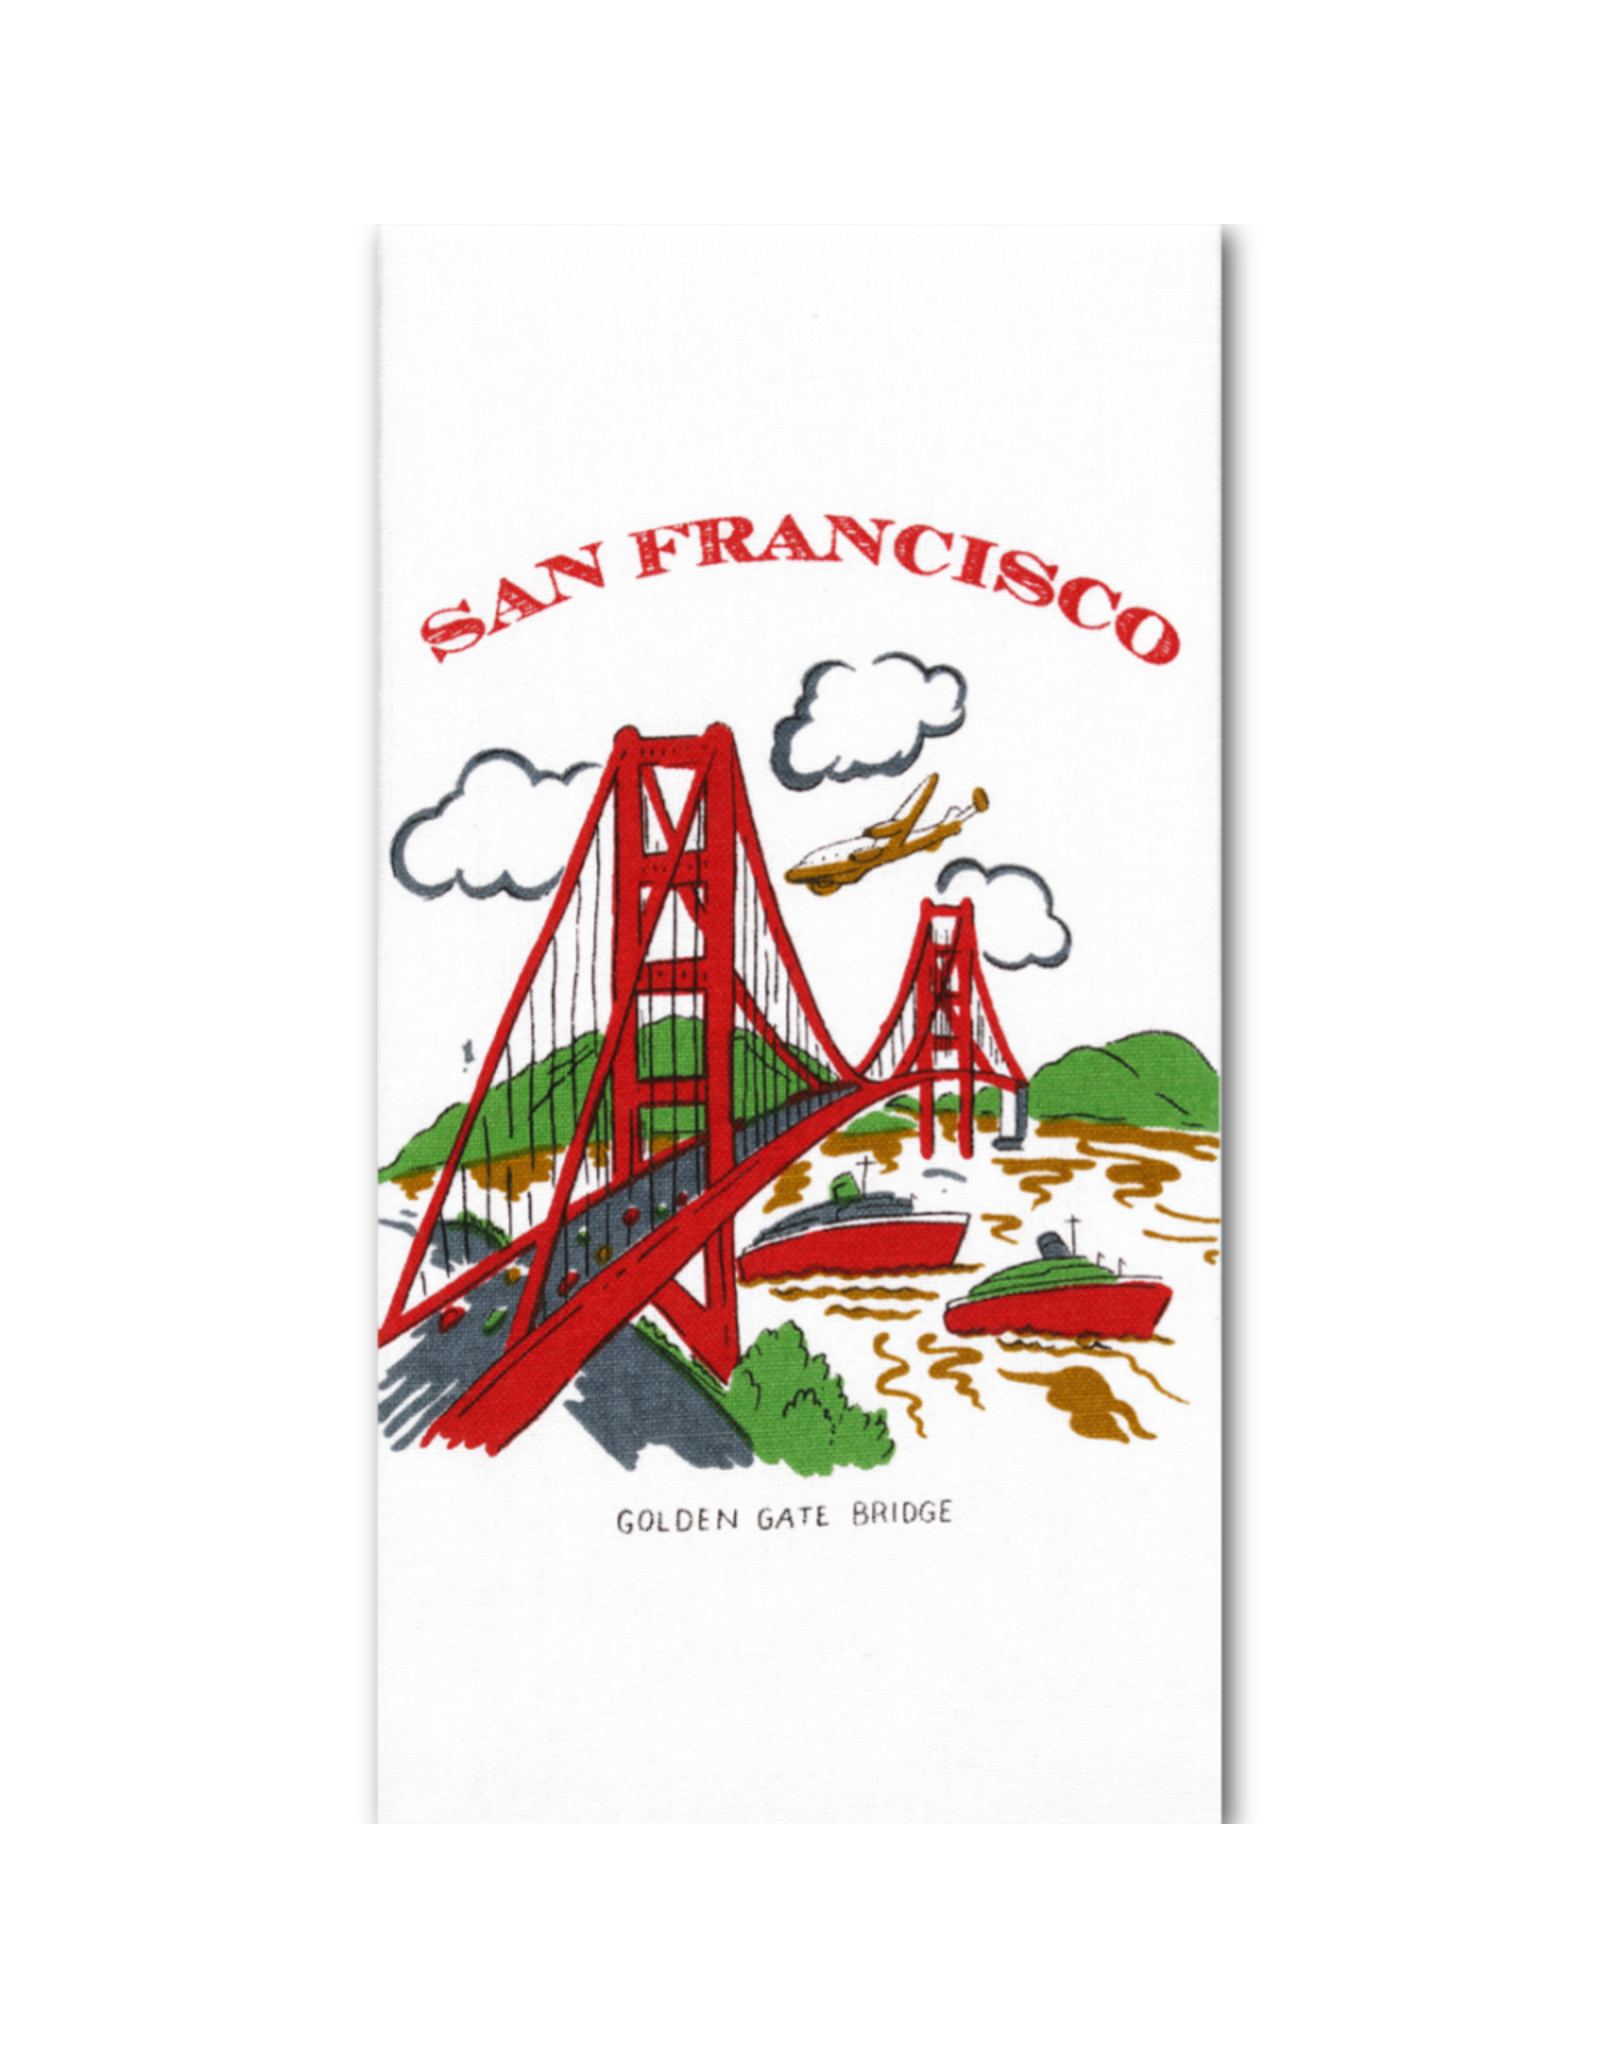 Red & White Kitchen Co. San Francisco Golden Gate Kitchen Towel 17” x 24”